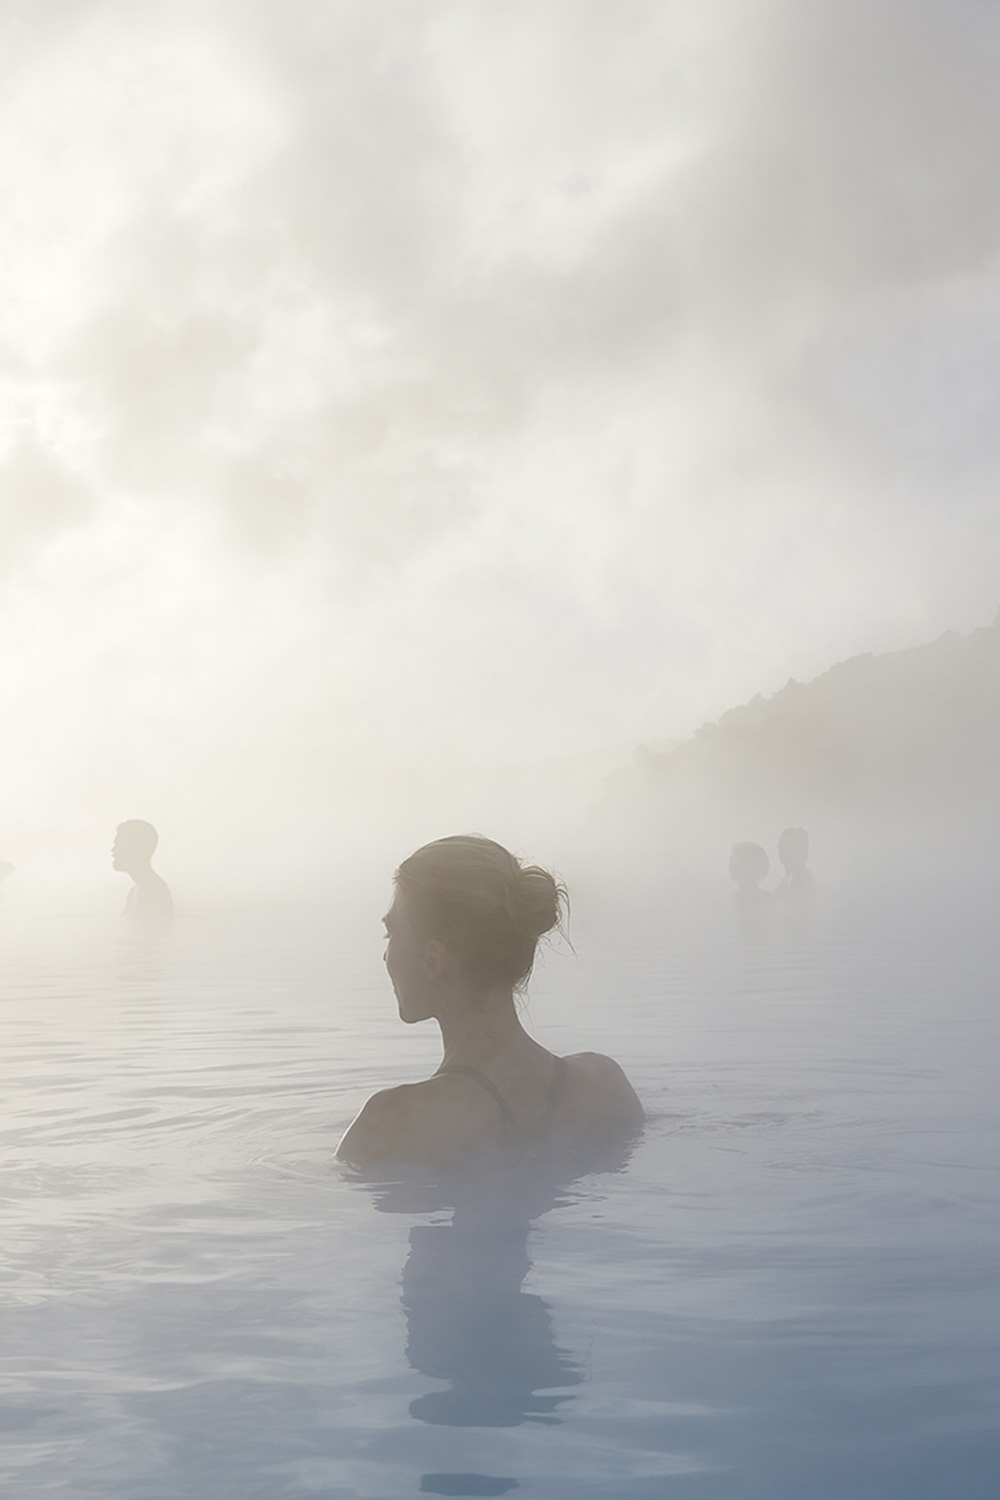 Blue Lagoon Suðurnes Iceland hot spring thermal bath